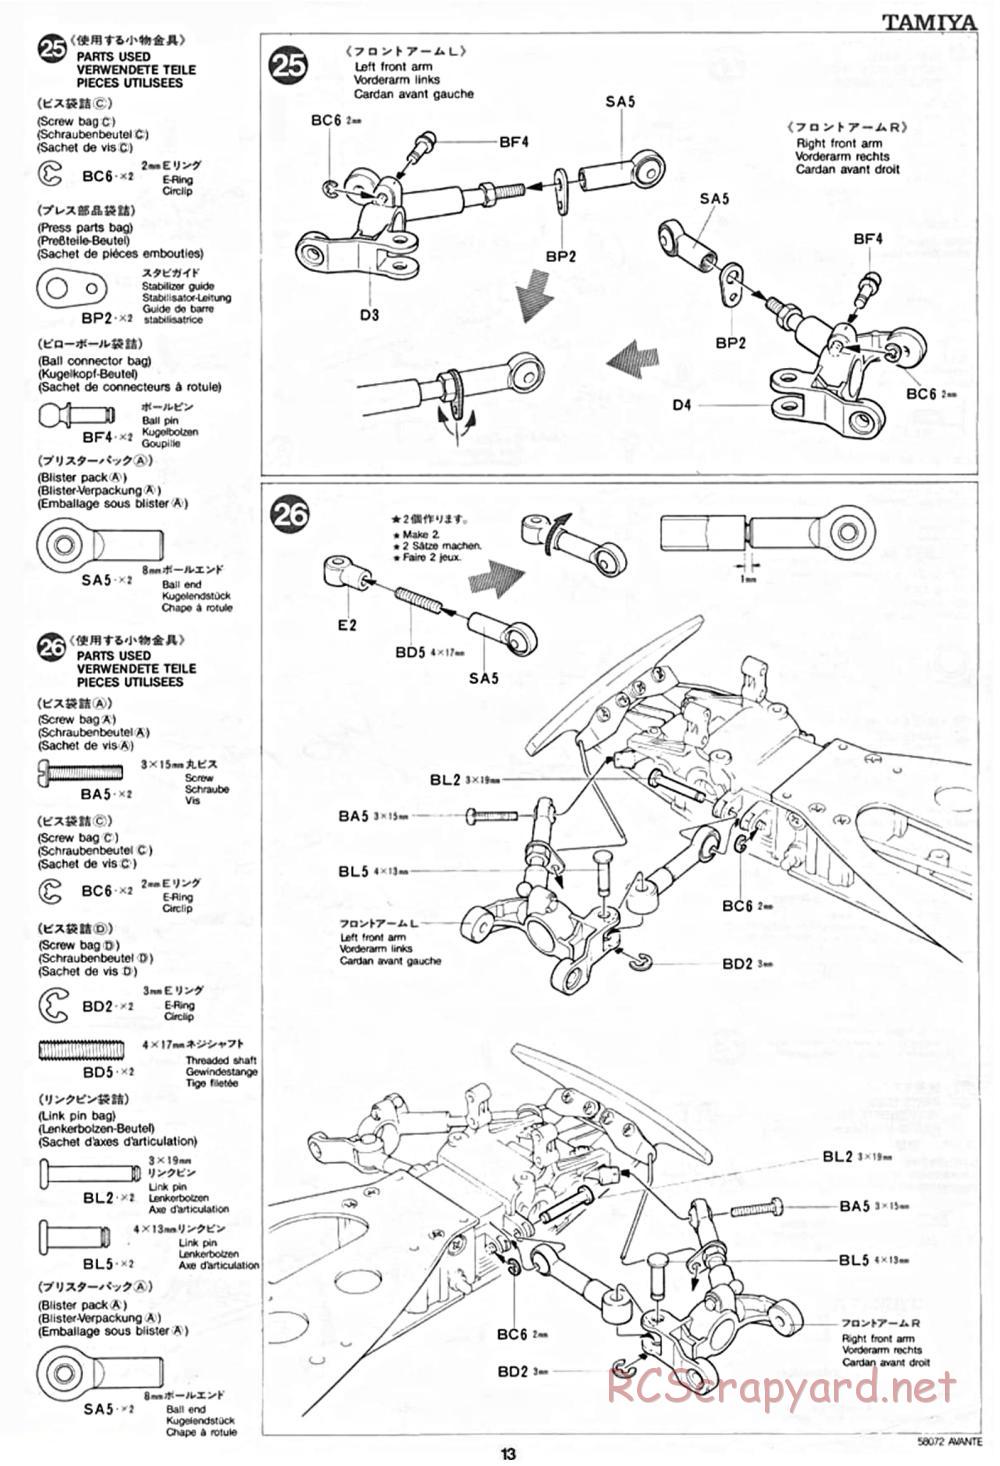 Tamiya - Avante - 58072 - Manual - Page 13